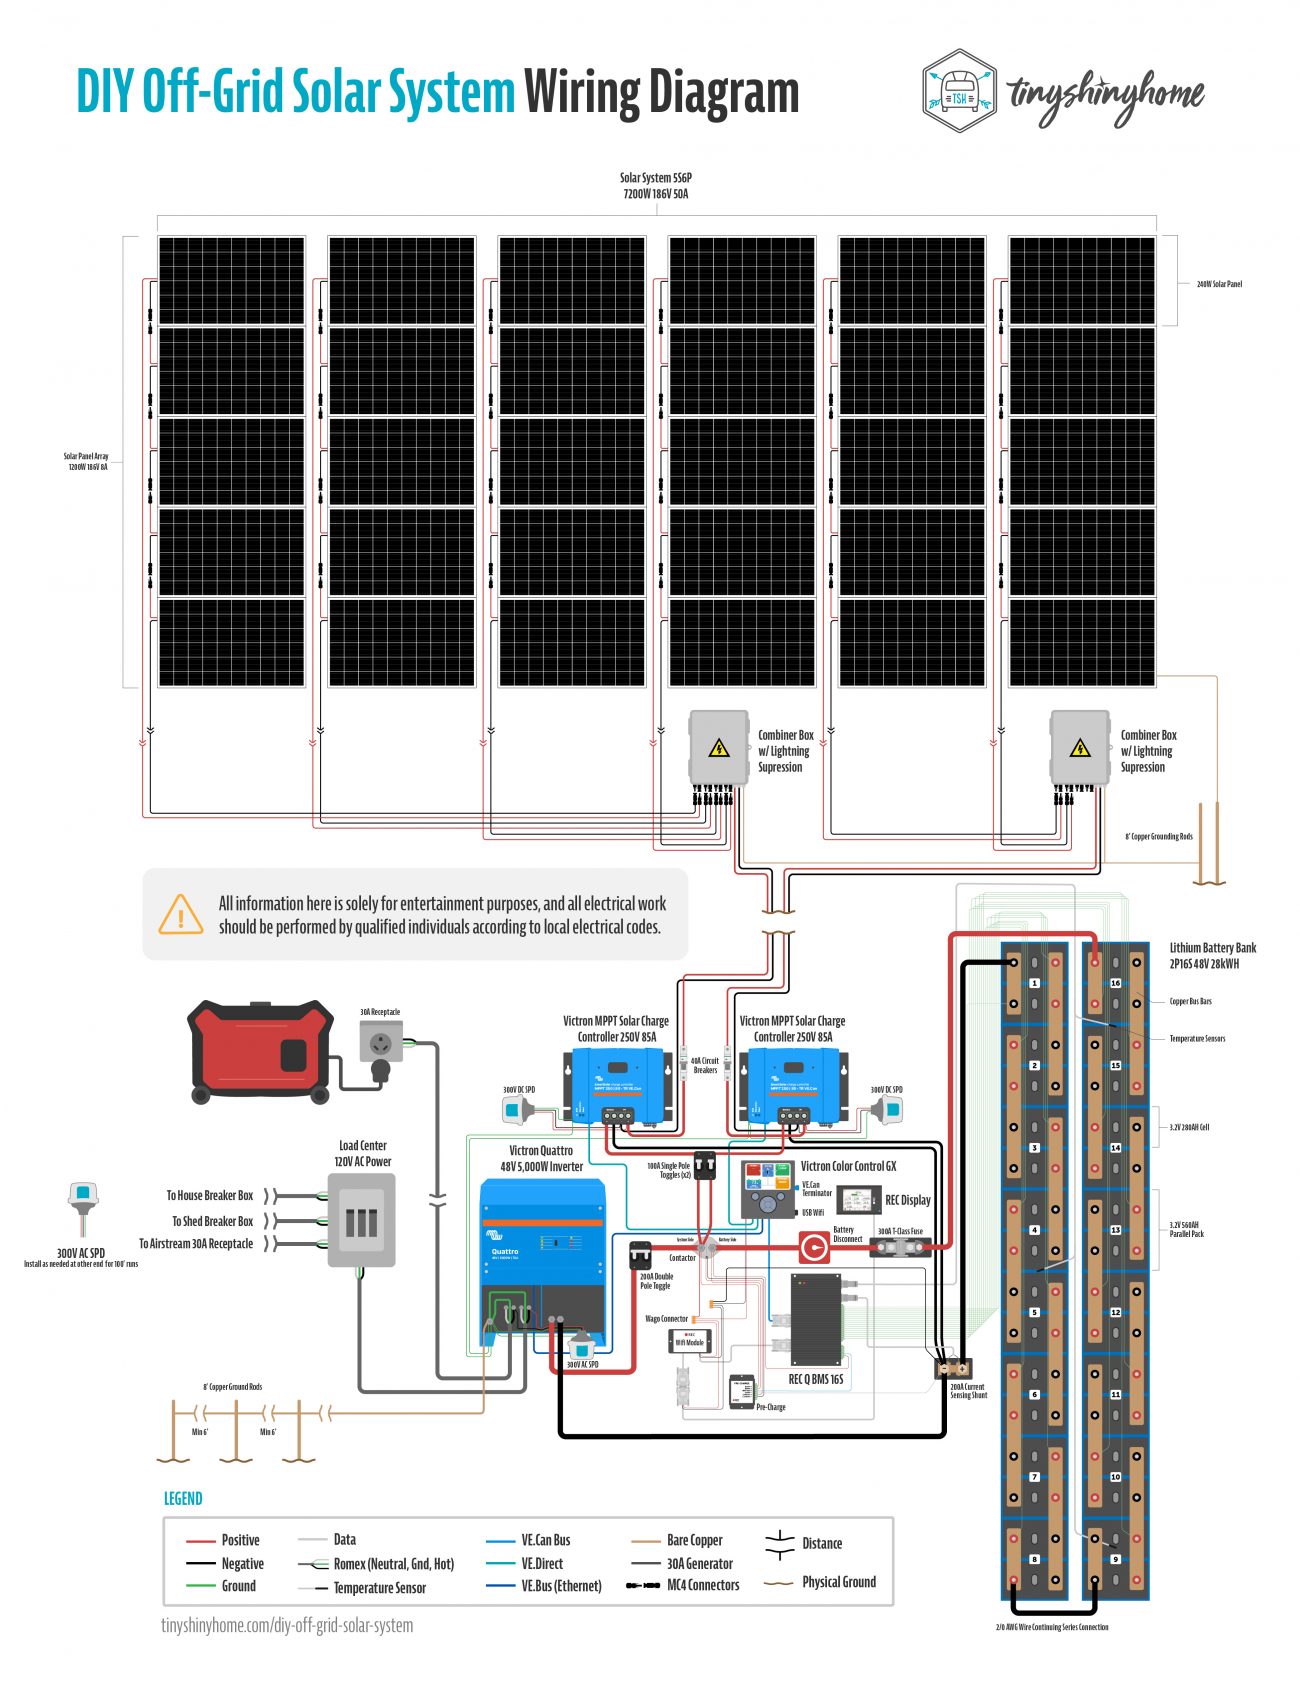 Off-grid Solar Battery Monitors - DIY Solar Power - Made Easy!